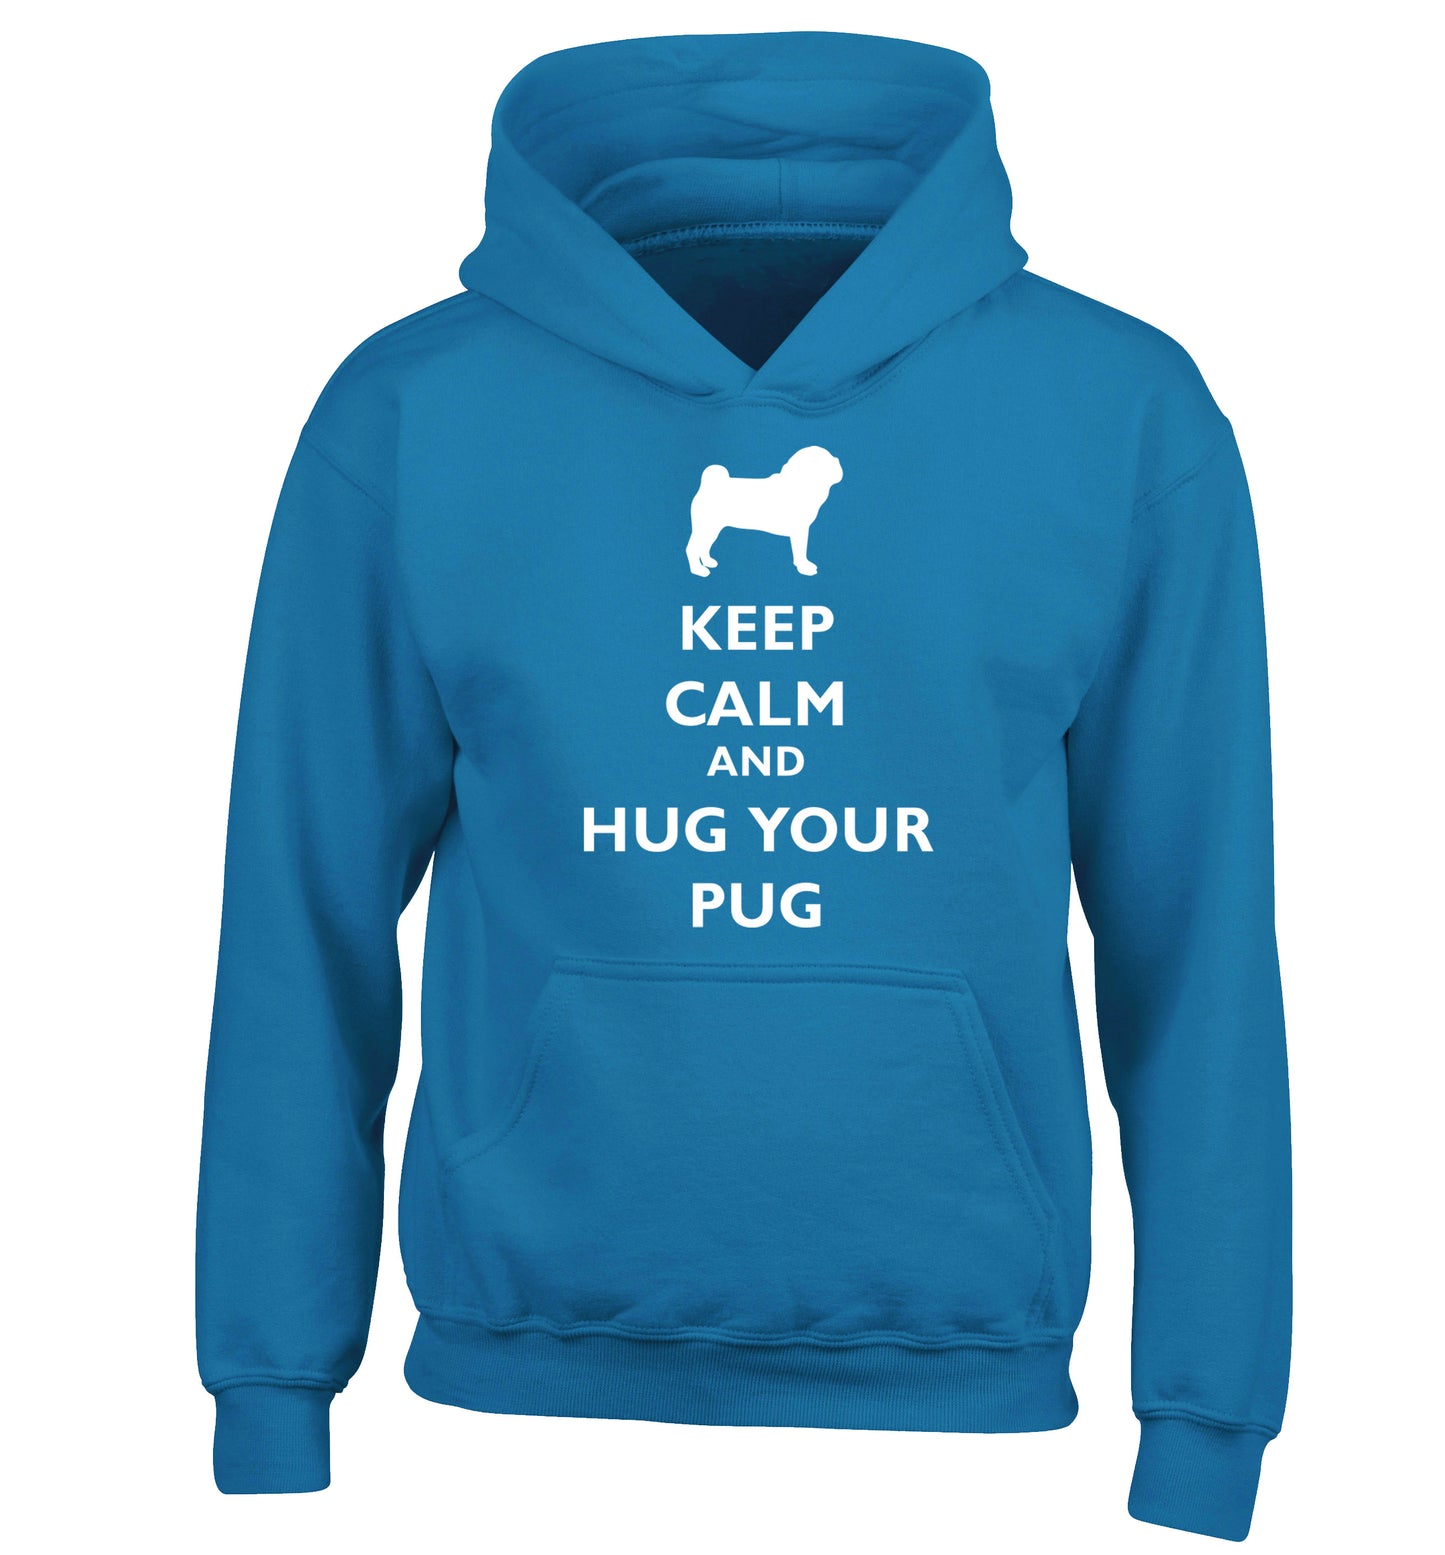 Keep calm and hug your pug children's blue hoodie 12-13 Years